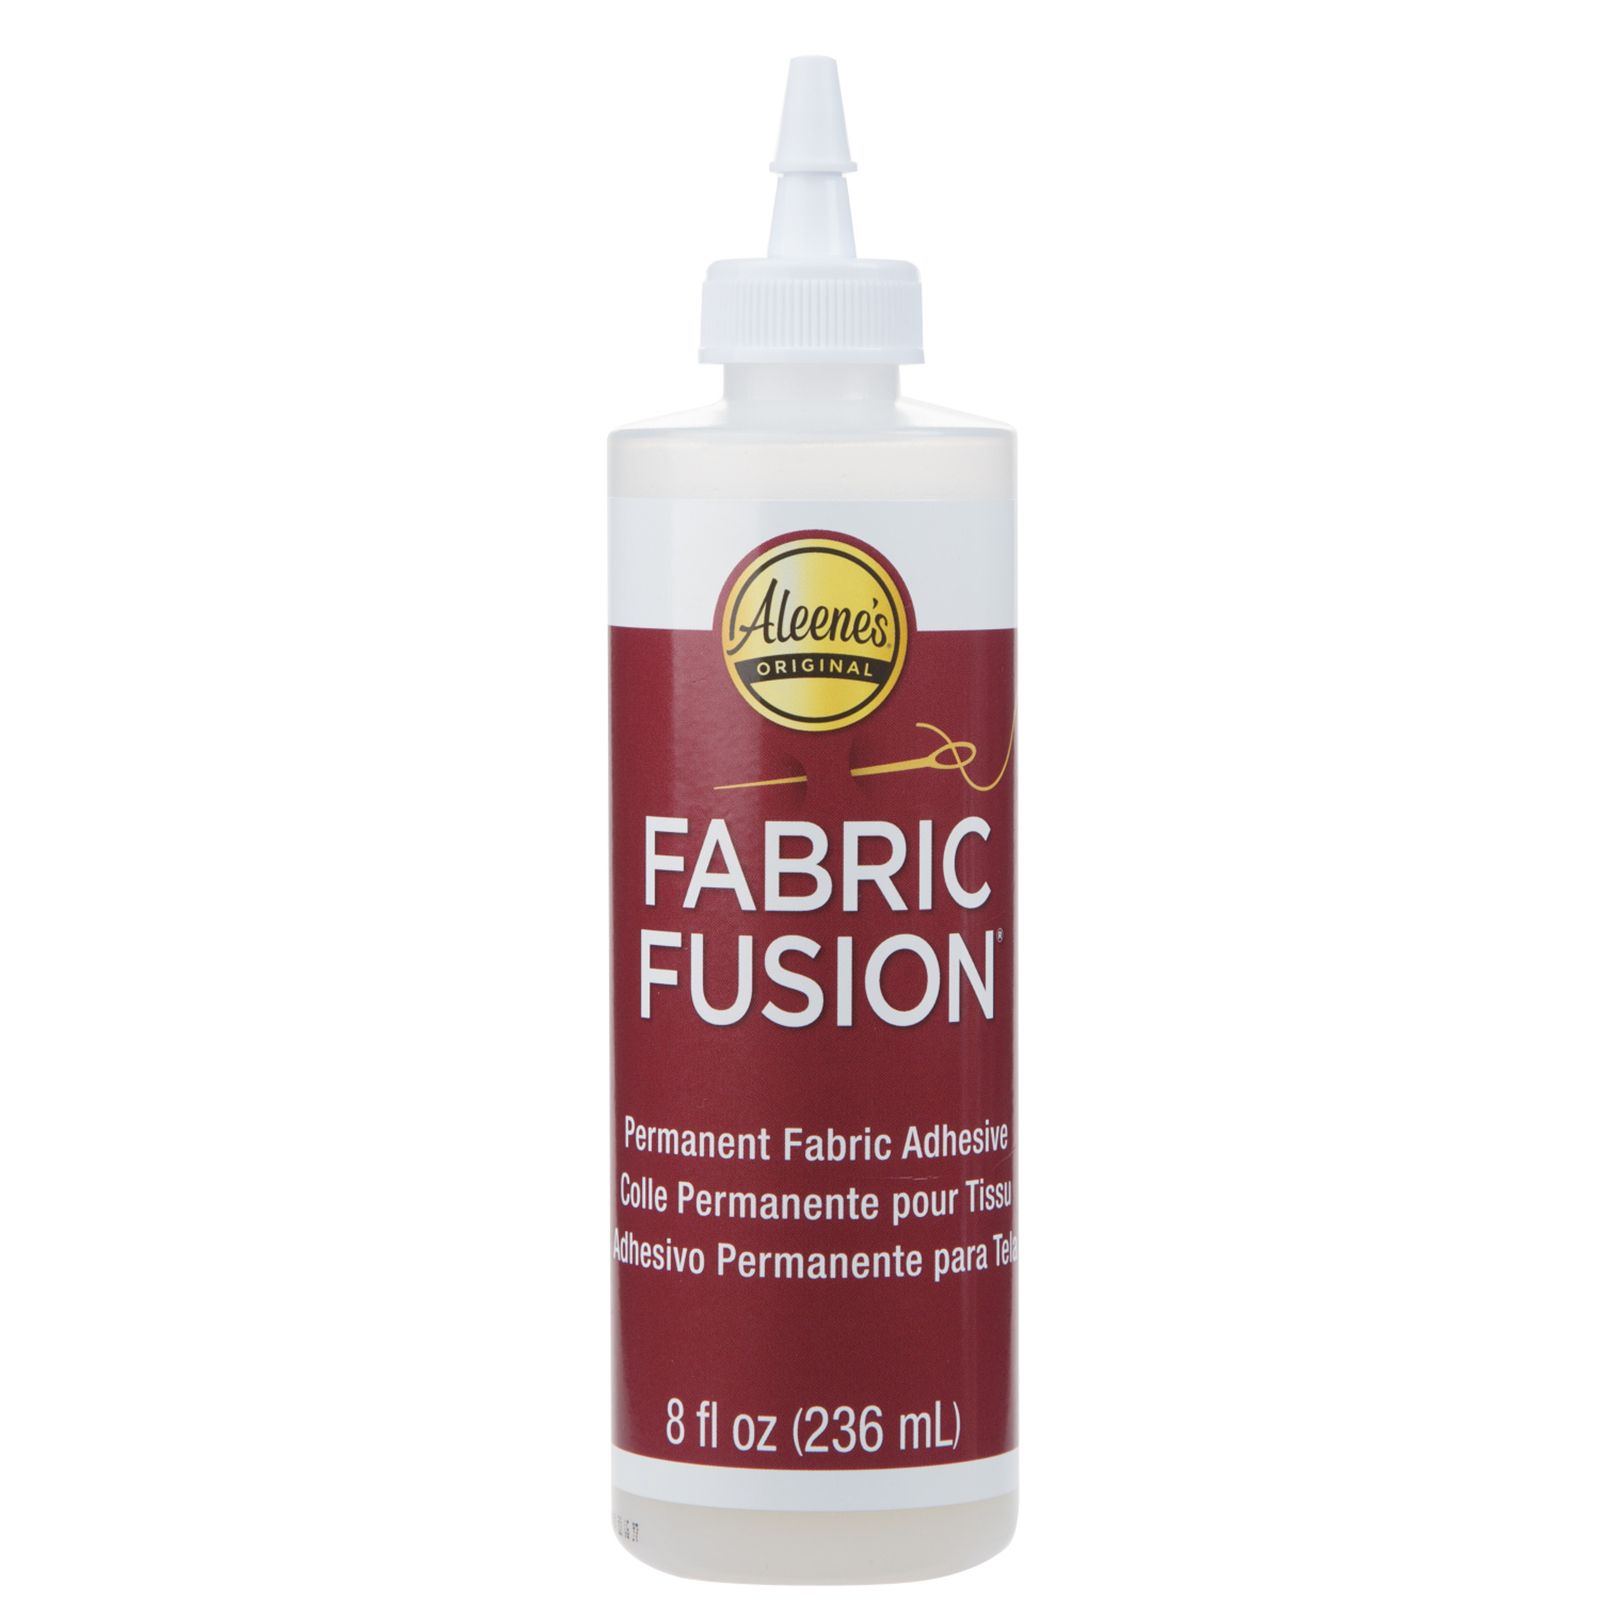 Aleene's • Fabric fusion glue permanent glue 236ml